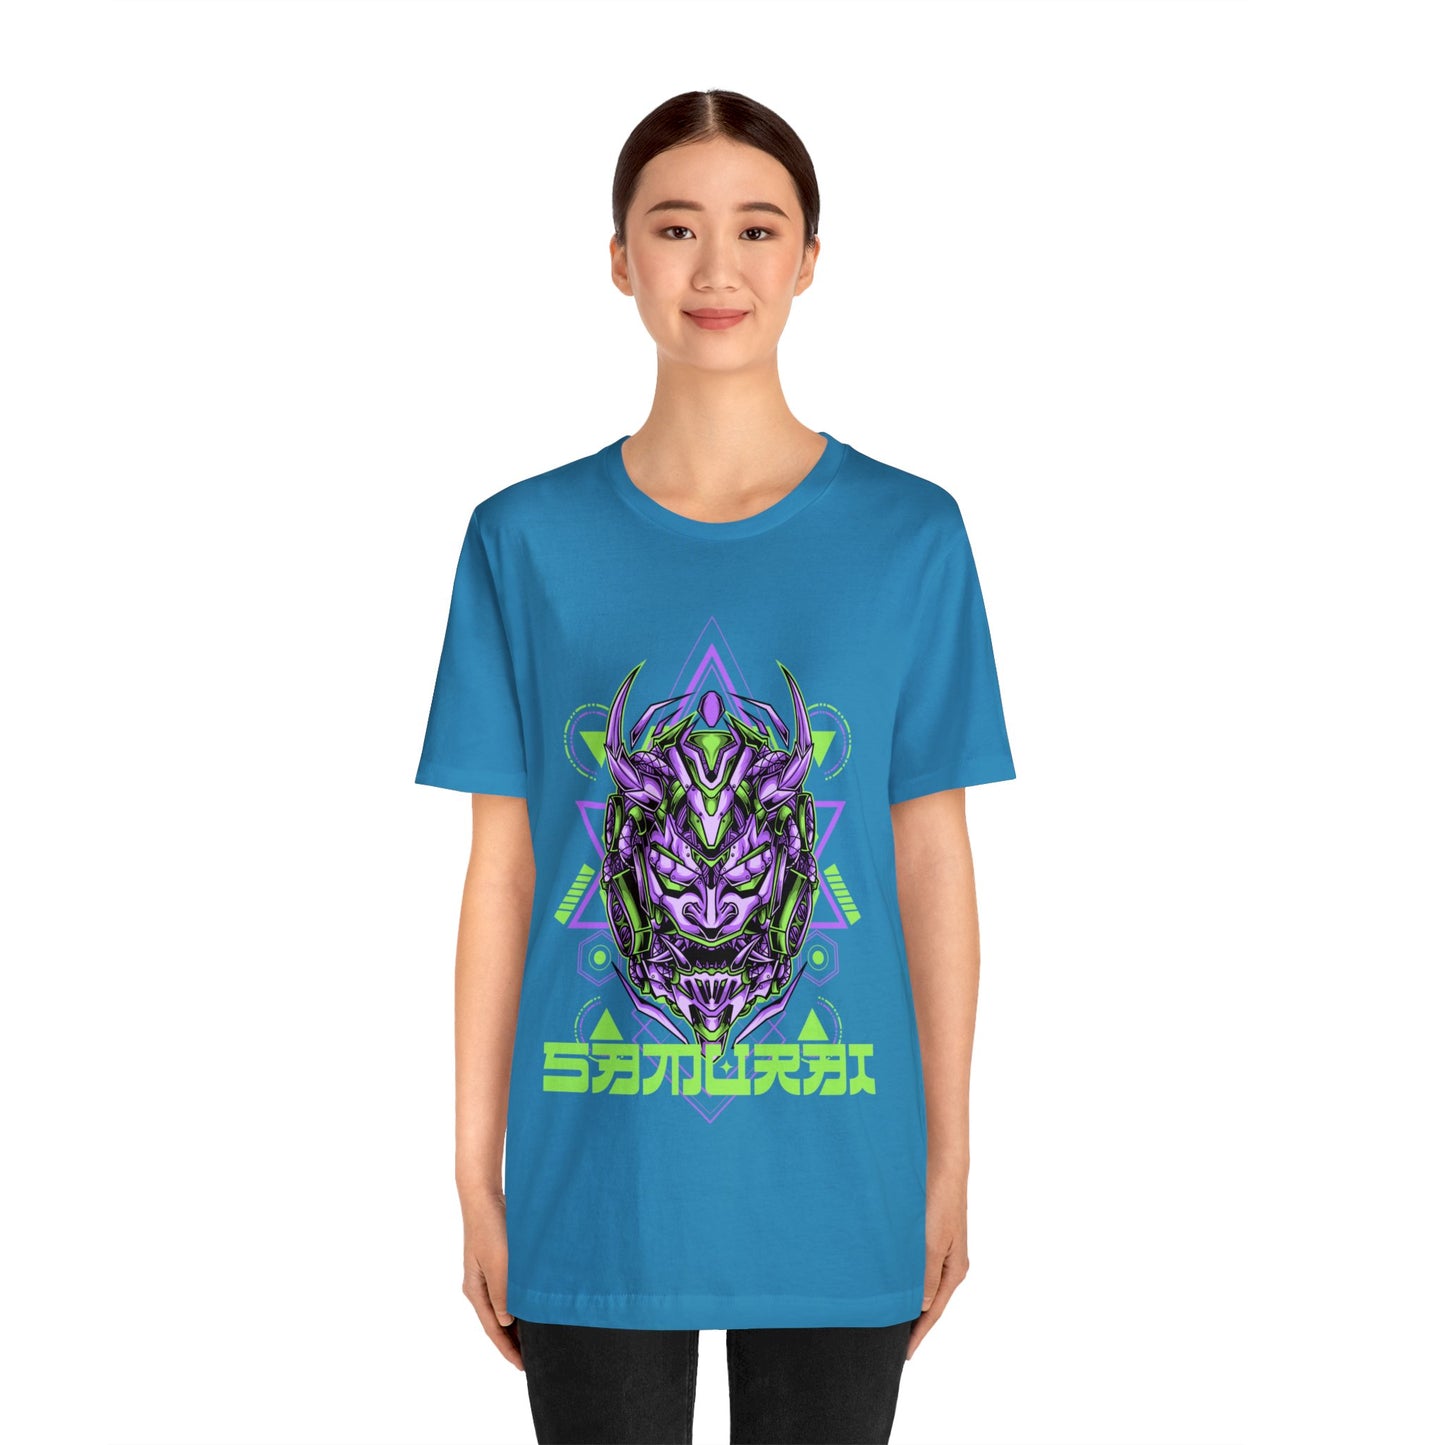 Cyber Samurai Warrior T-Shirt